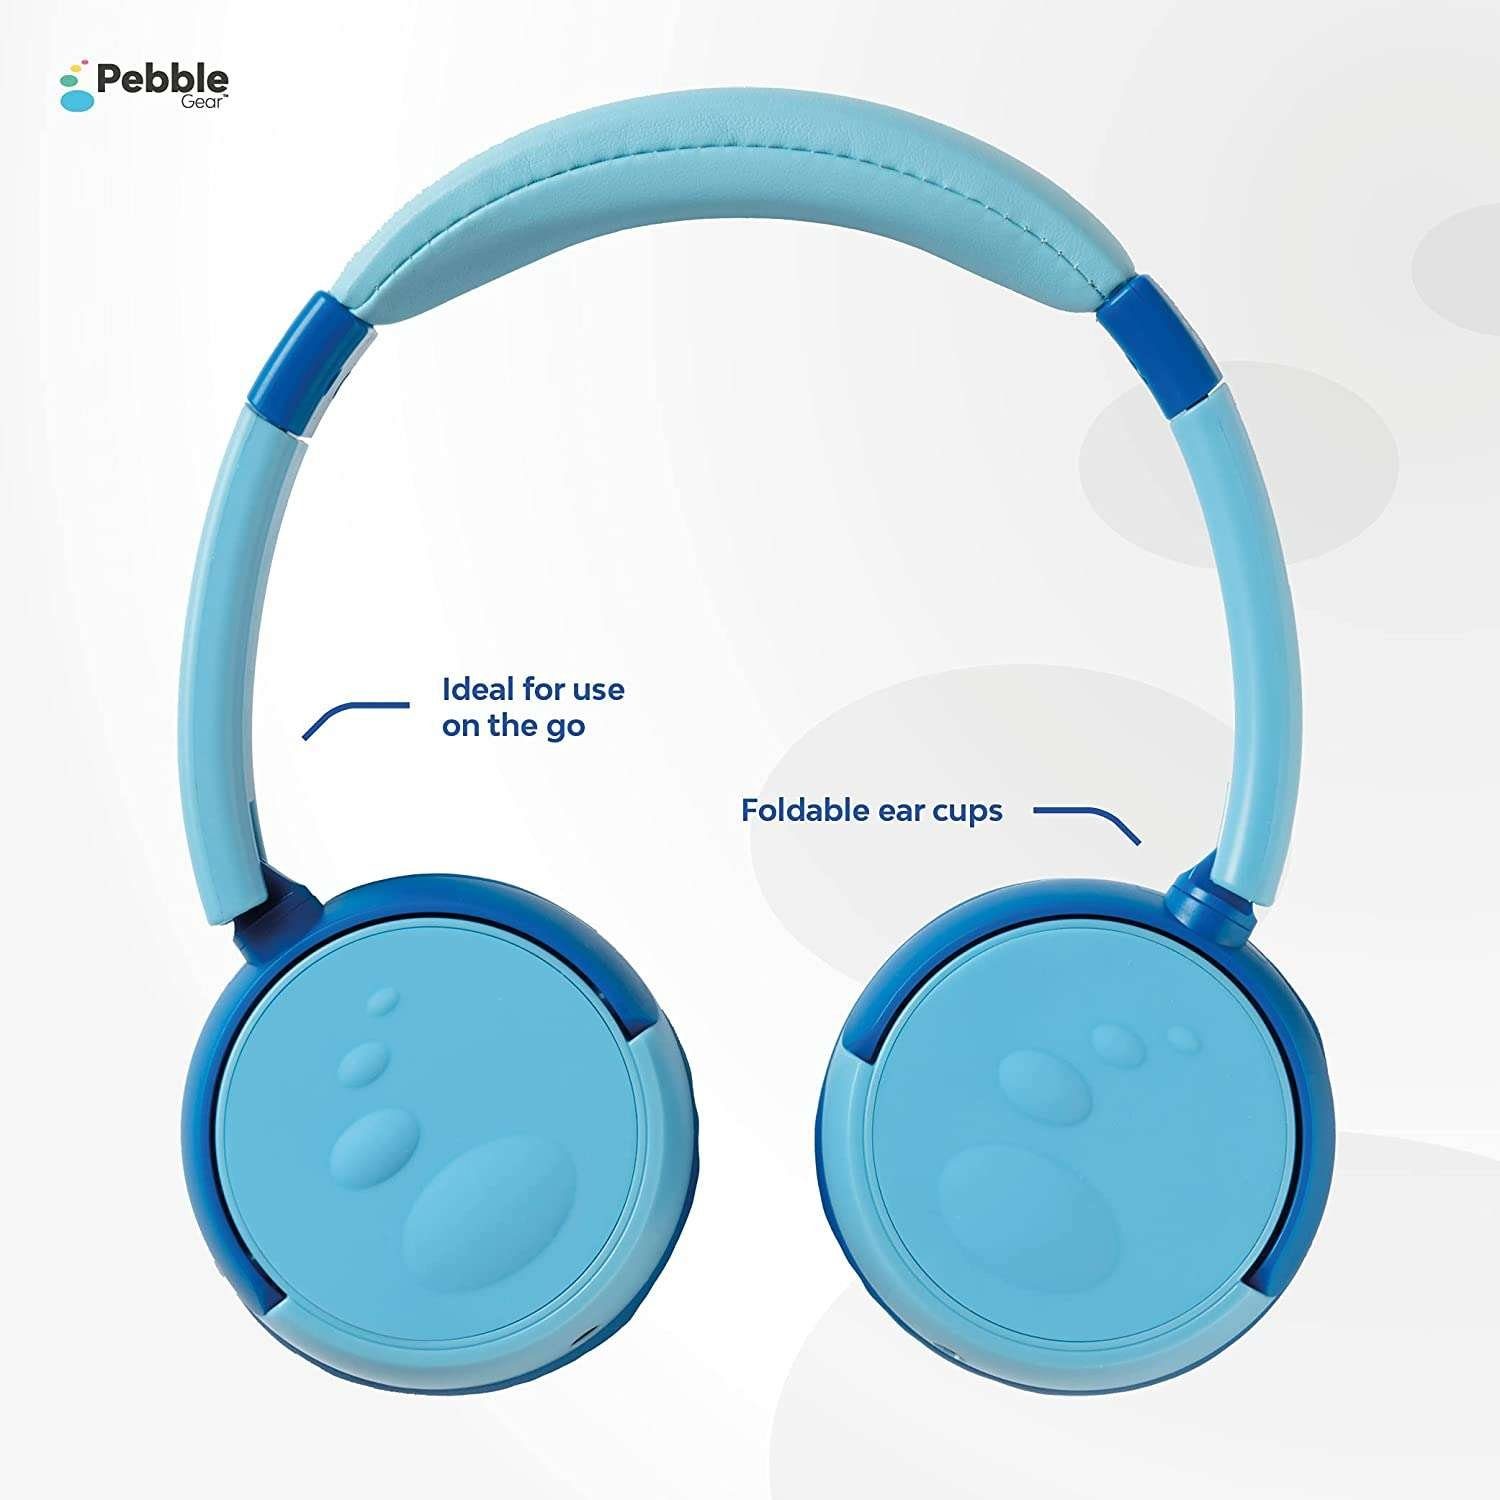 Pebble Gear Kinderkopfhörer pink faltbar, Klinke 85 Kinder-Kopfhörer Lautstärkebegrenzung blau/ (3,5mm Kids-Design) - dB kindersicher